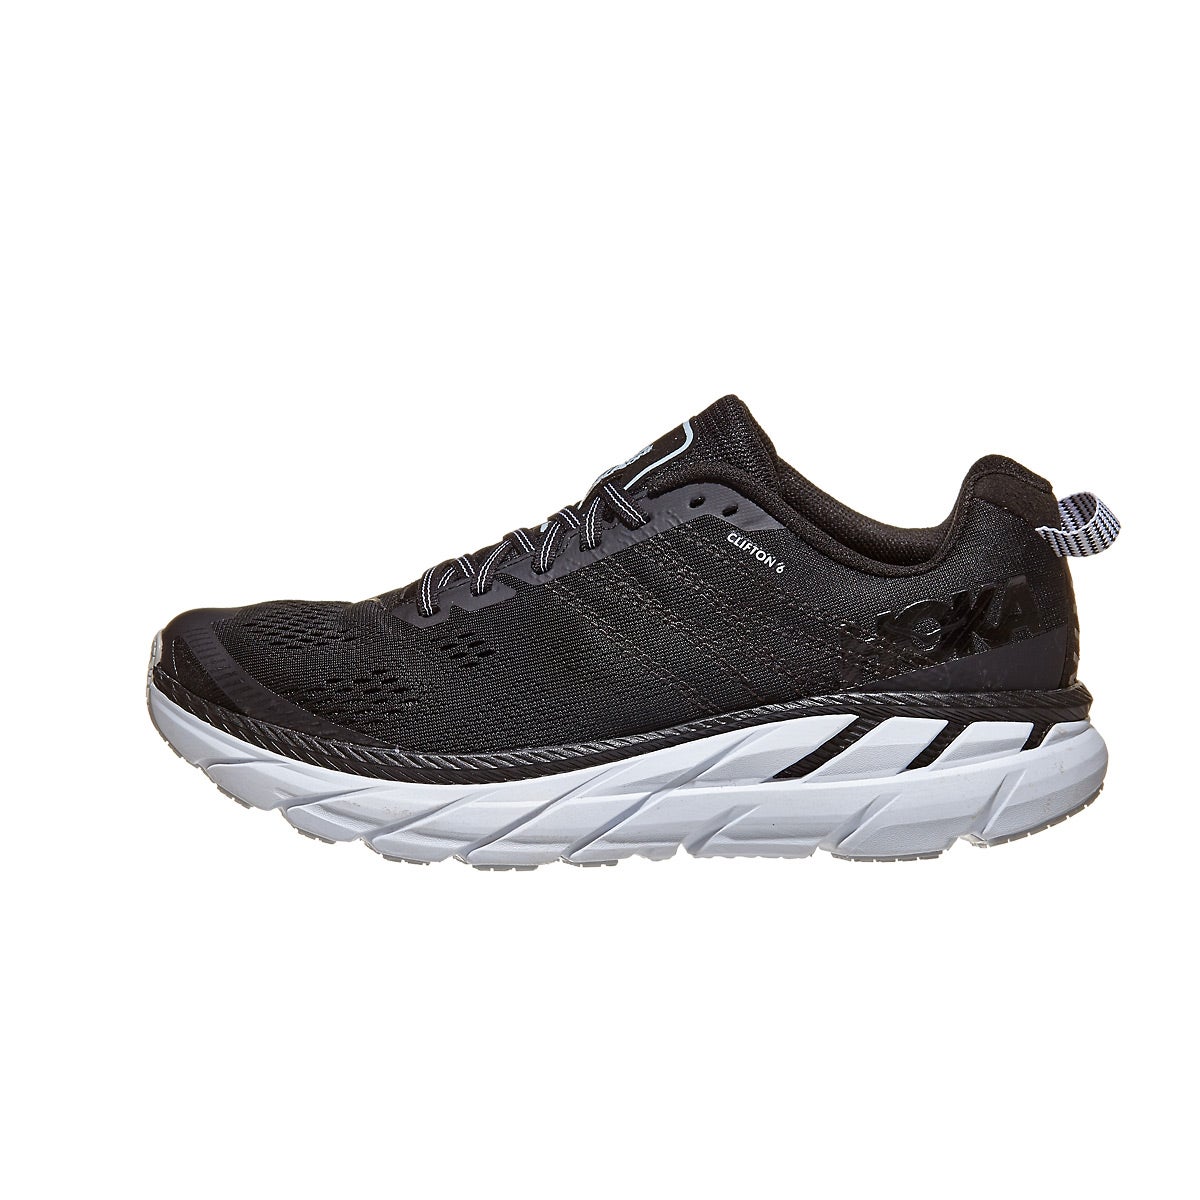 HOKA ONE ONE Clifton 6 Women's Shoes Black/White 360° View | Running ...